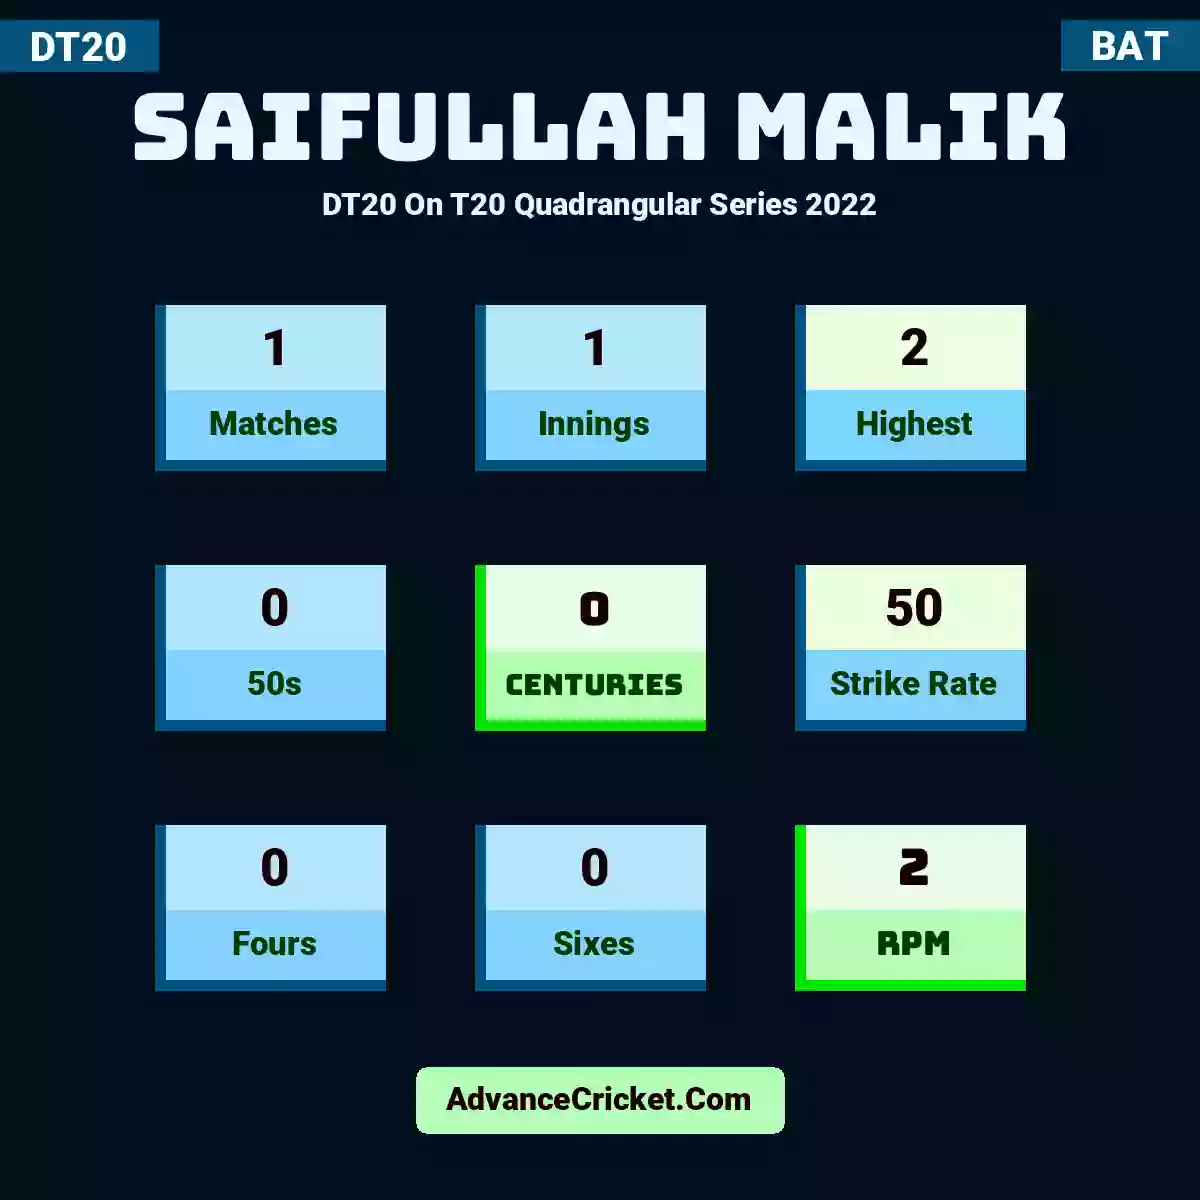 Saifullah Malik DT20  On T20 Quadrangular Series 2022, Saifullah Malik played 1 matches, scored 2 runs as highest, 0 half-centuries, and 0 centuries, with a strike rate of 50. S.Malik hit 0 fours and 0 sixes, with an RPM of 2.